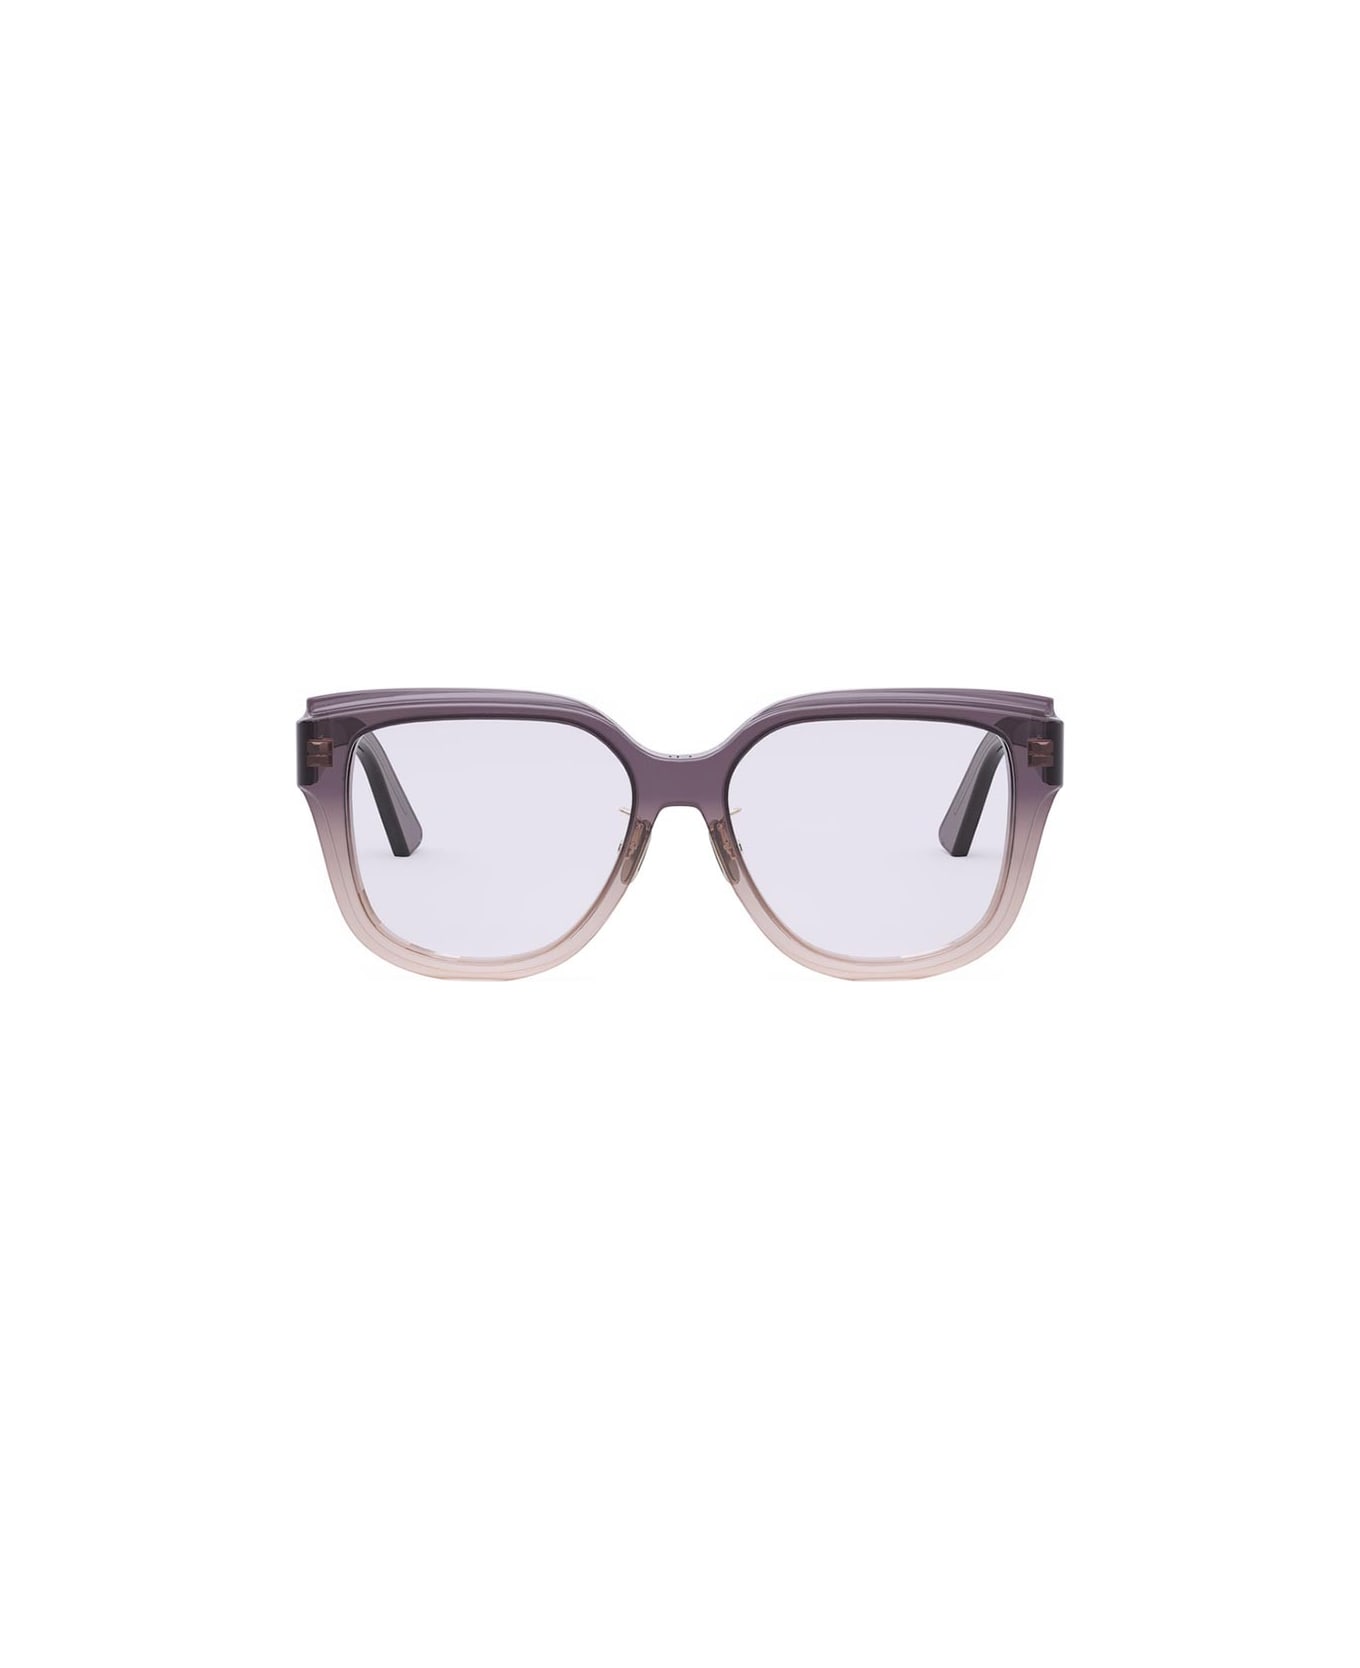 Dior Eyewear Glasses - Viola